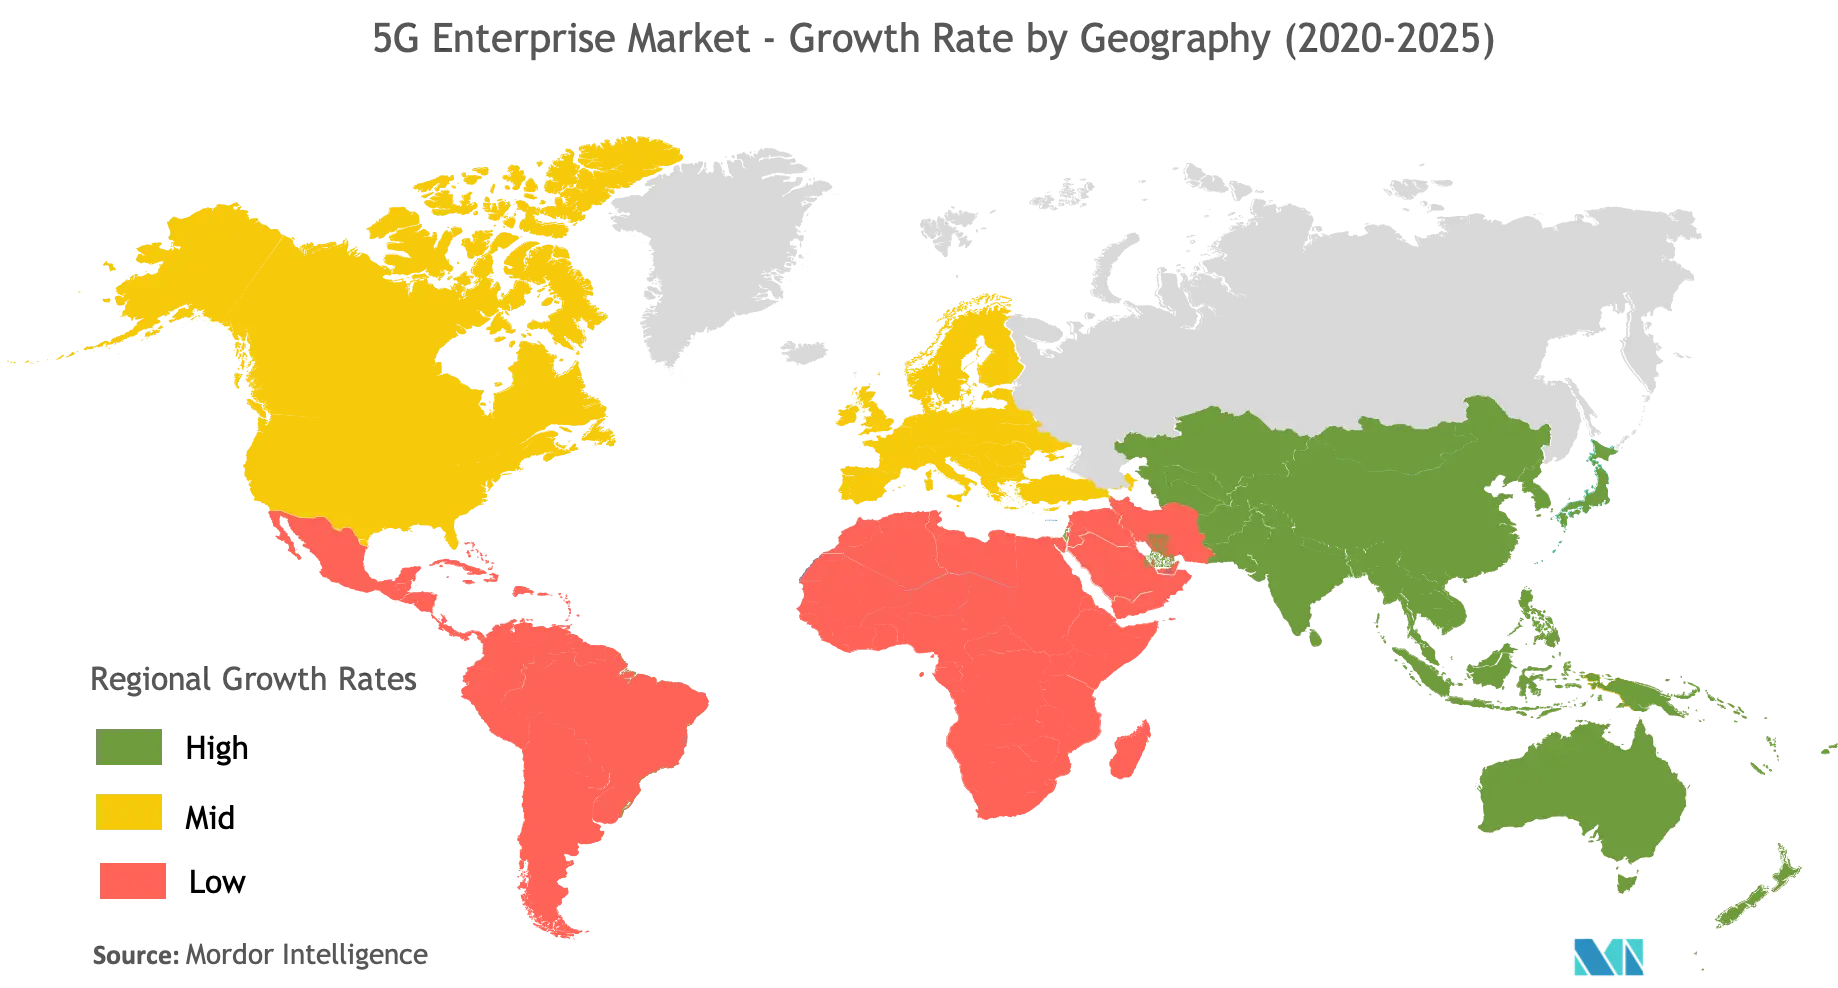 5G enterprise market growth by region